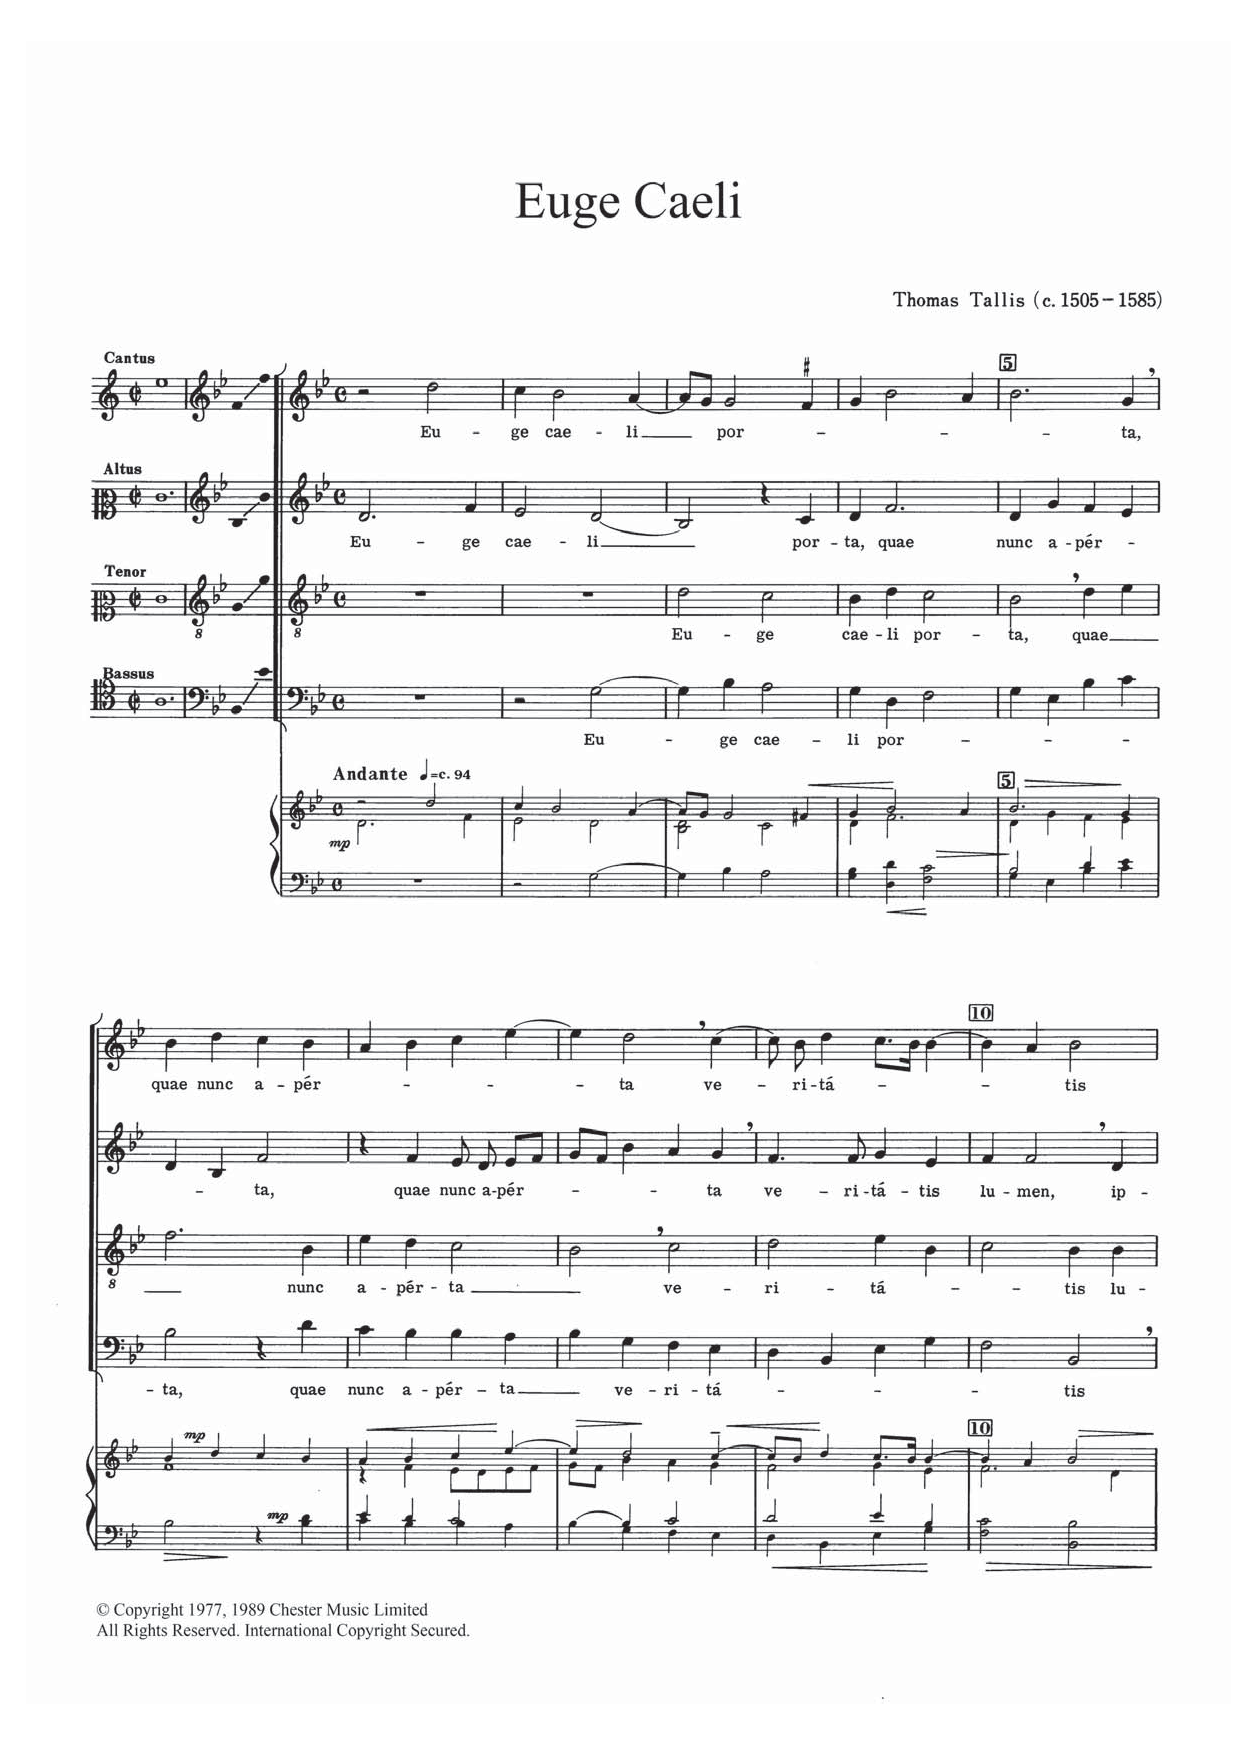 Thomas Tallis Euge Caeli sheet music notes and chords arranged for SATB Choir